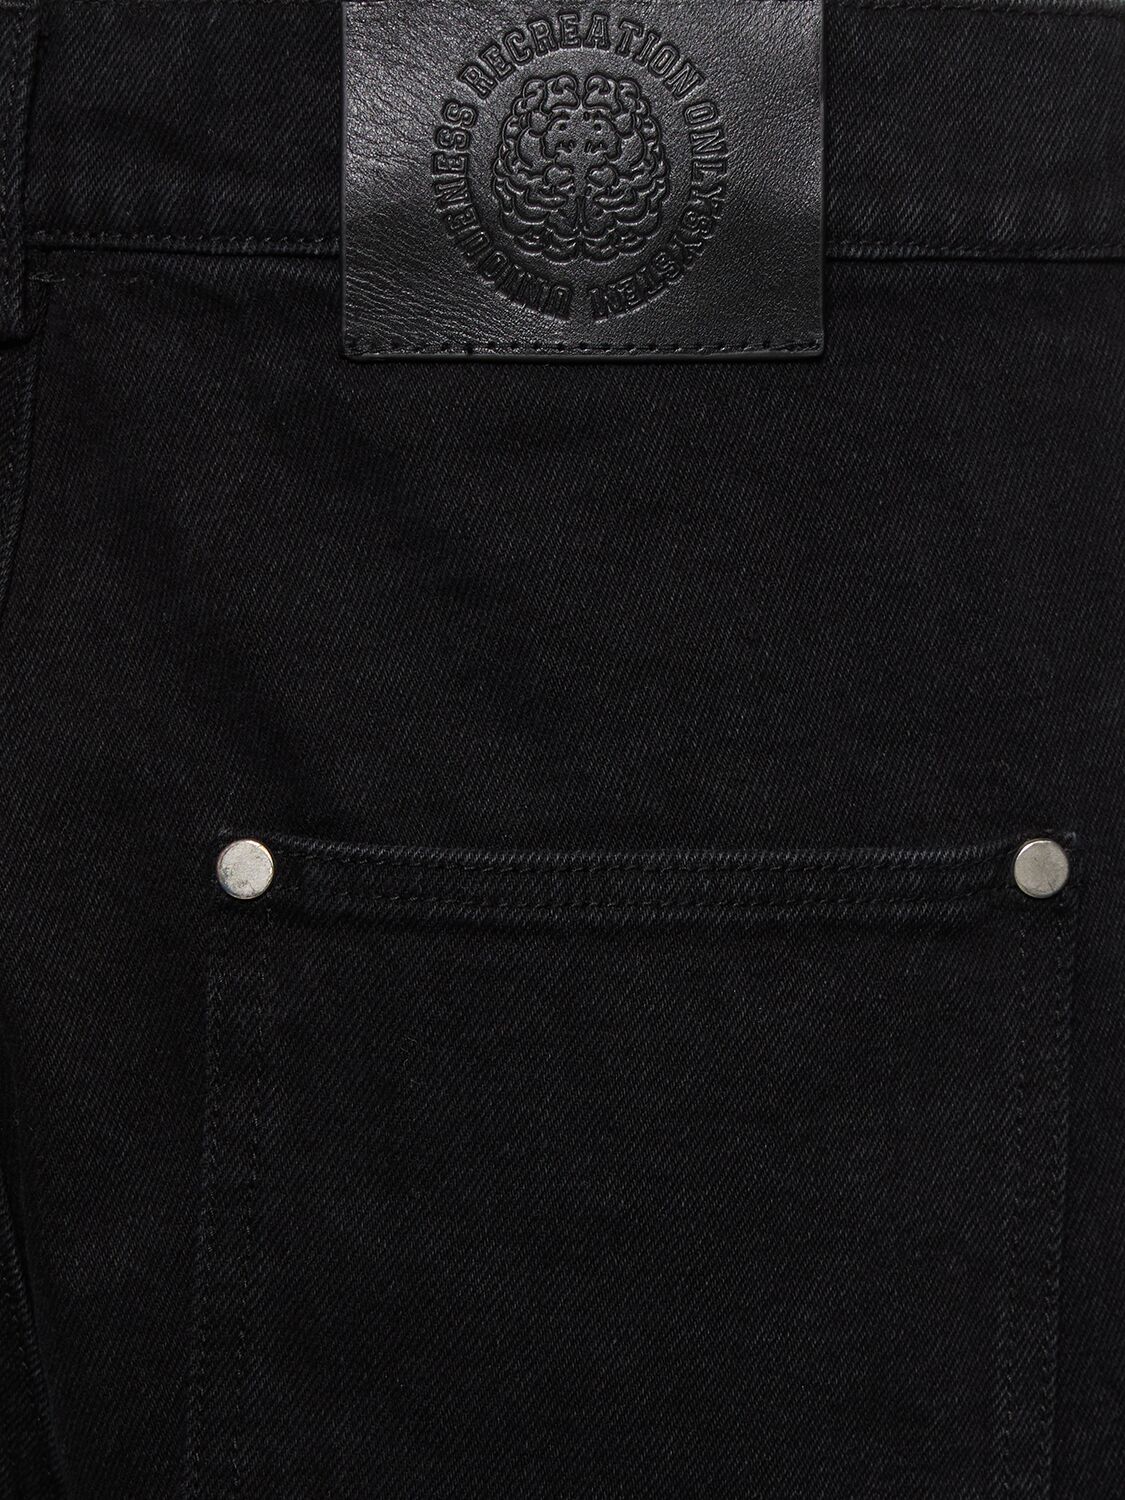 Shop Someit S.o.c Vintage Cotton Denim Jeans In Black